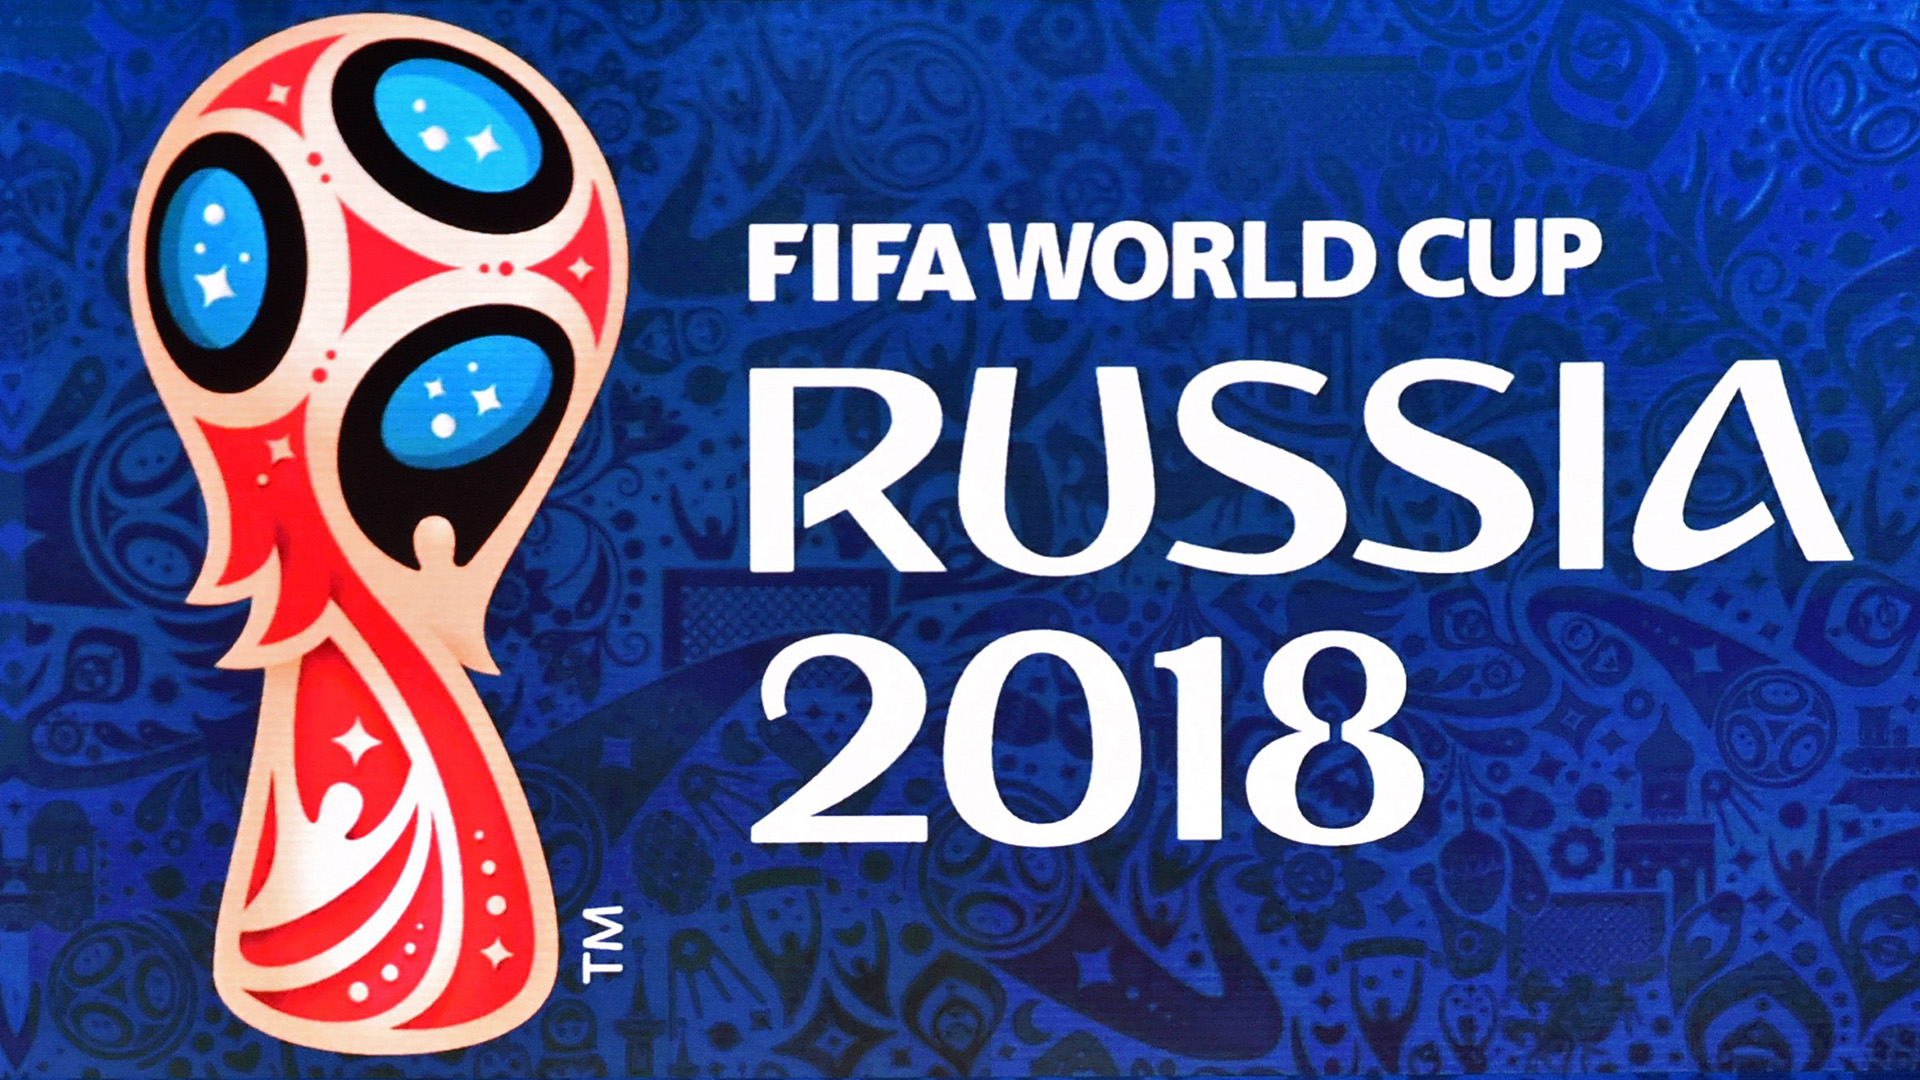 FIFA World Cup 2018 Russia Wallpaper HD - Visual Arts Ideas